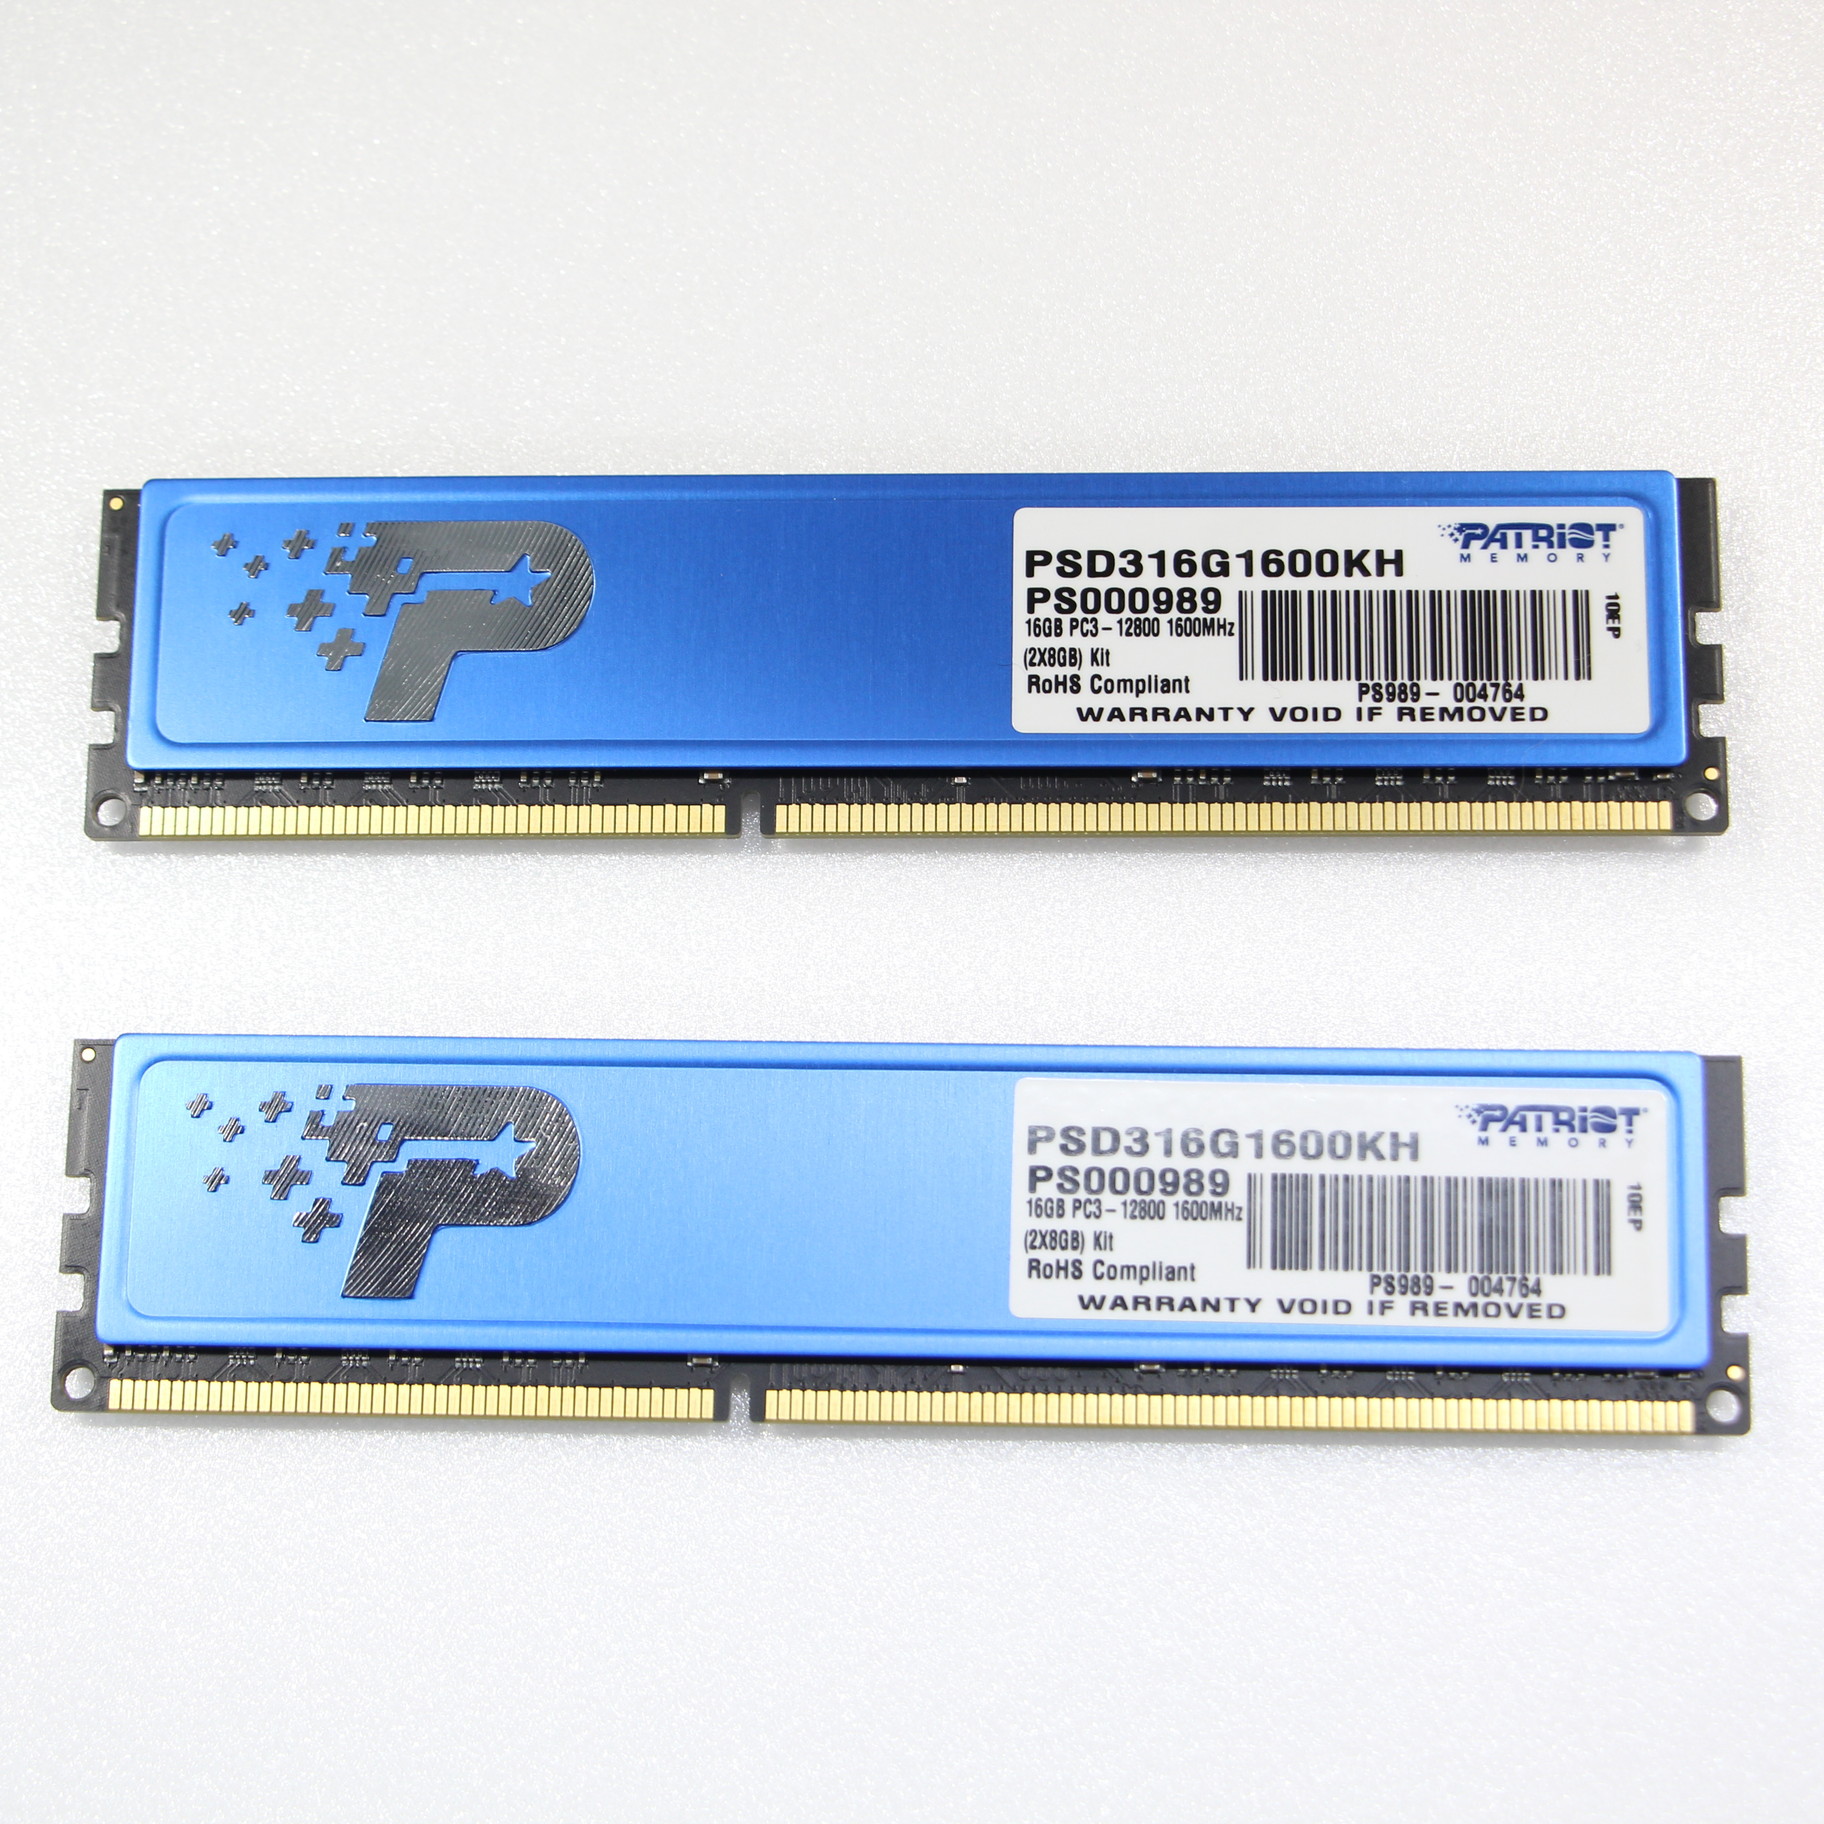 PSD316G 1600KH DDR3 PC3-12800 8G 2枚組